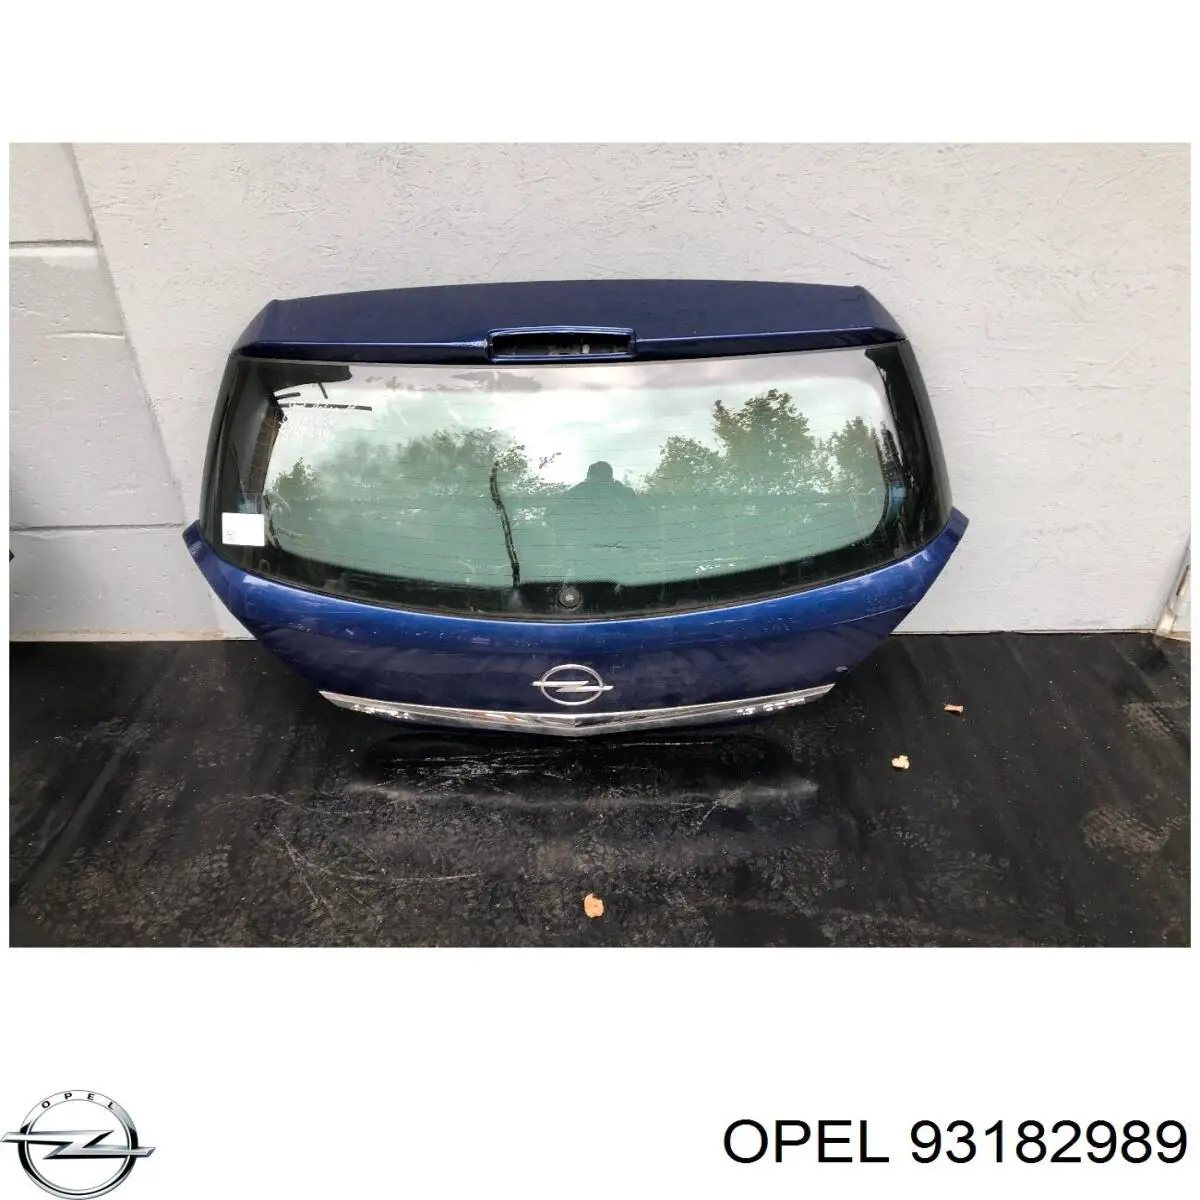 93182989 Opel puerta del maletero, trasera